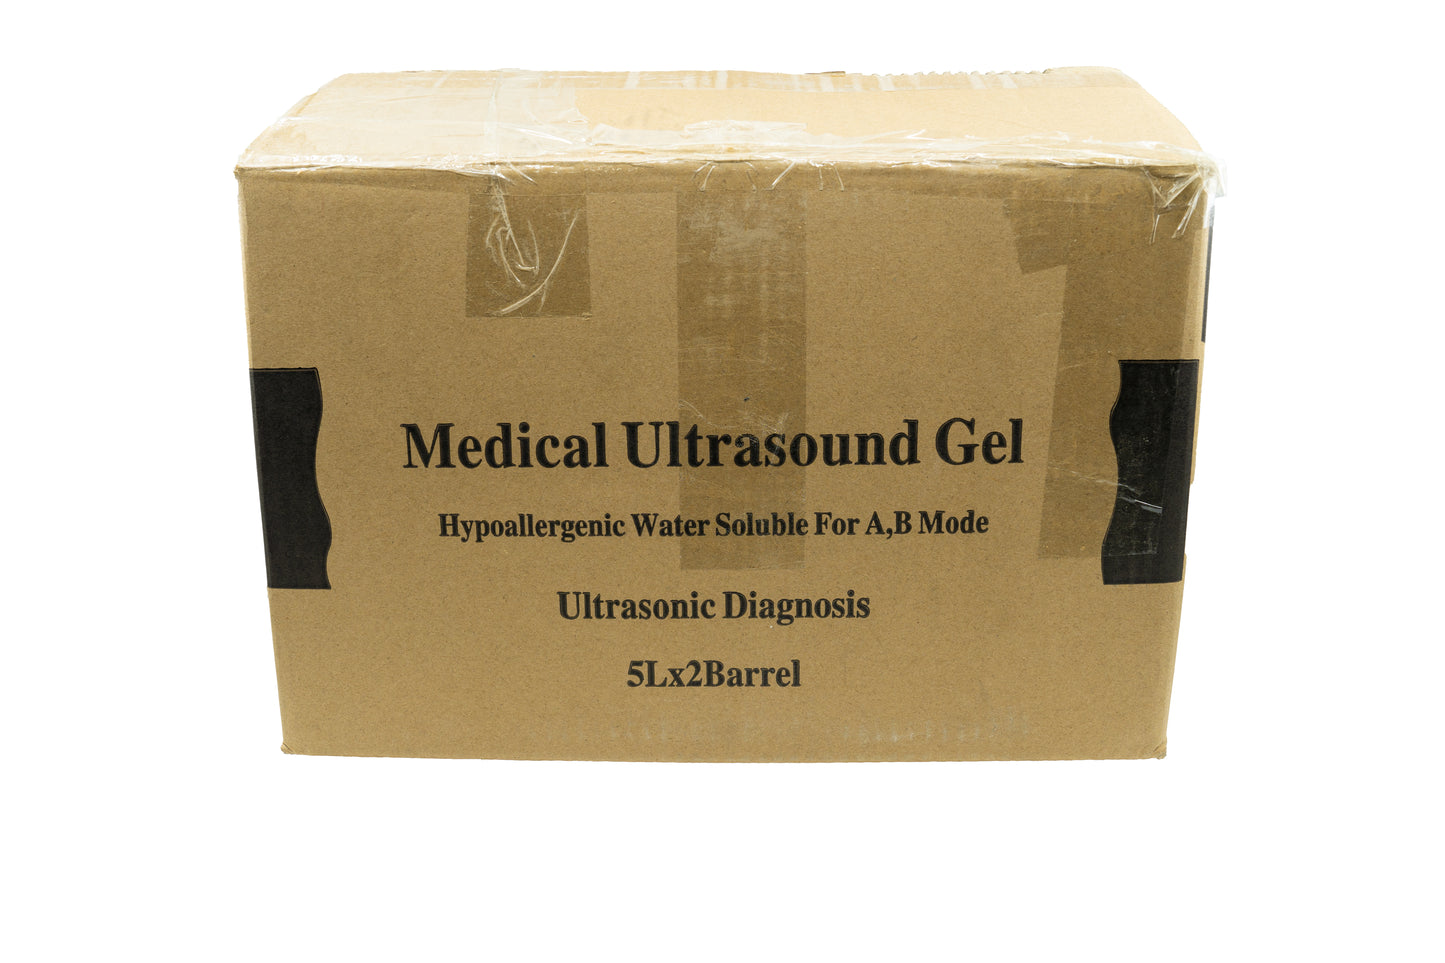 Medical Ultrasound Gel 5L x 2